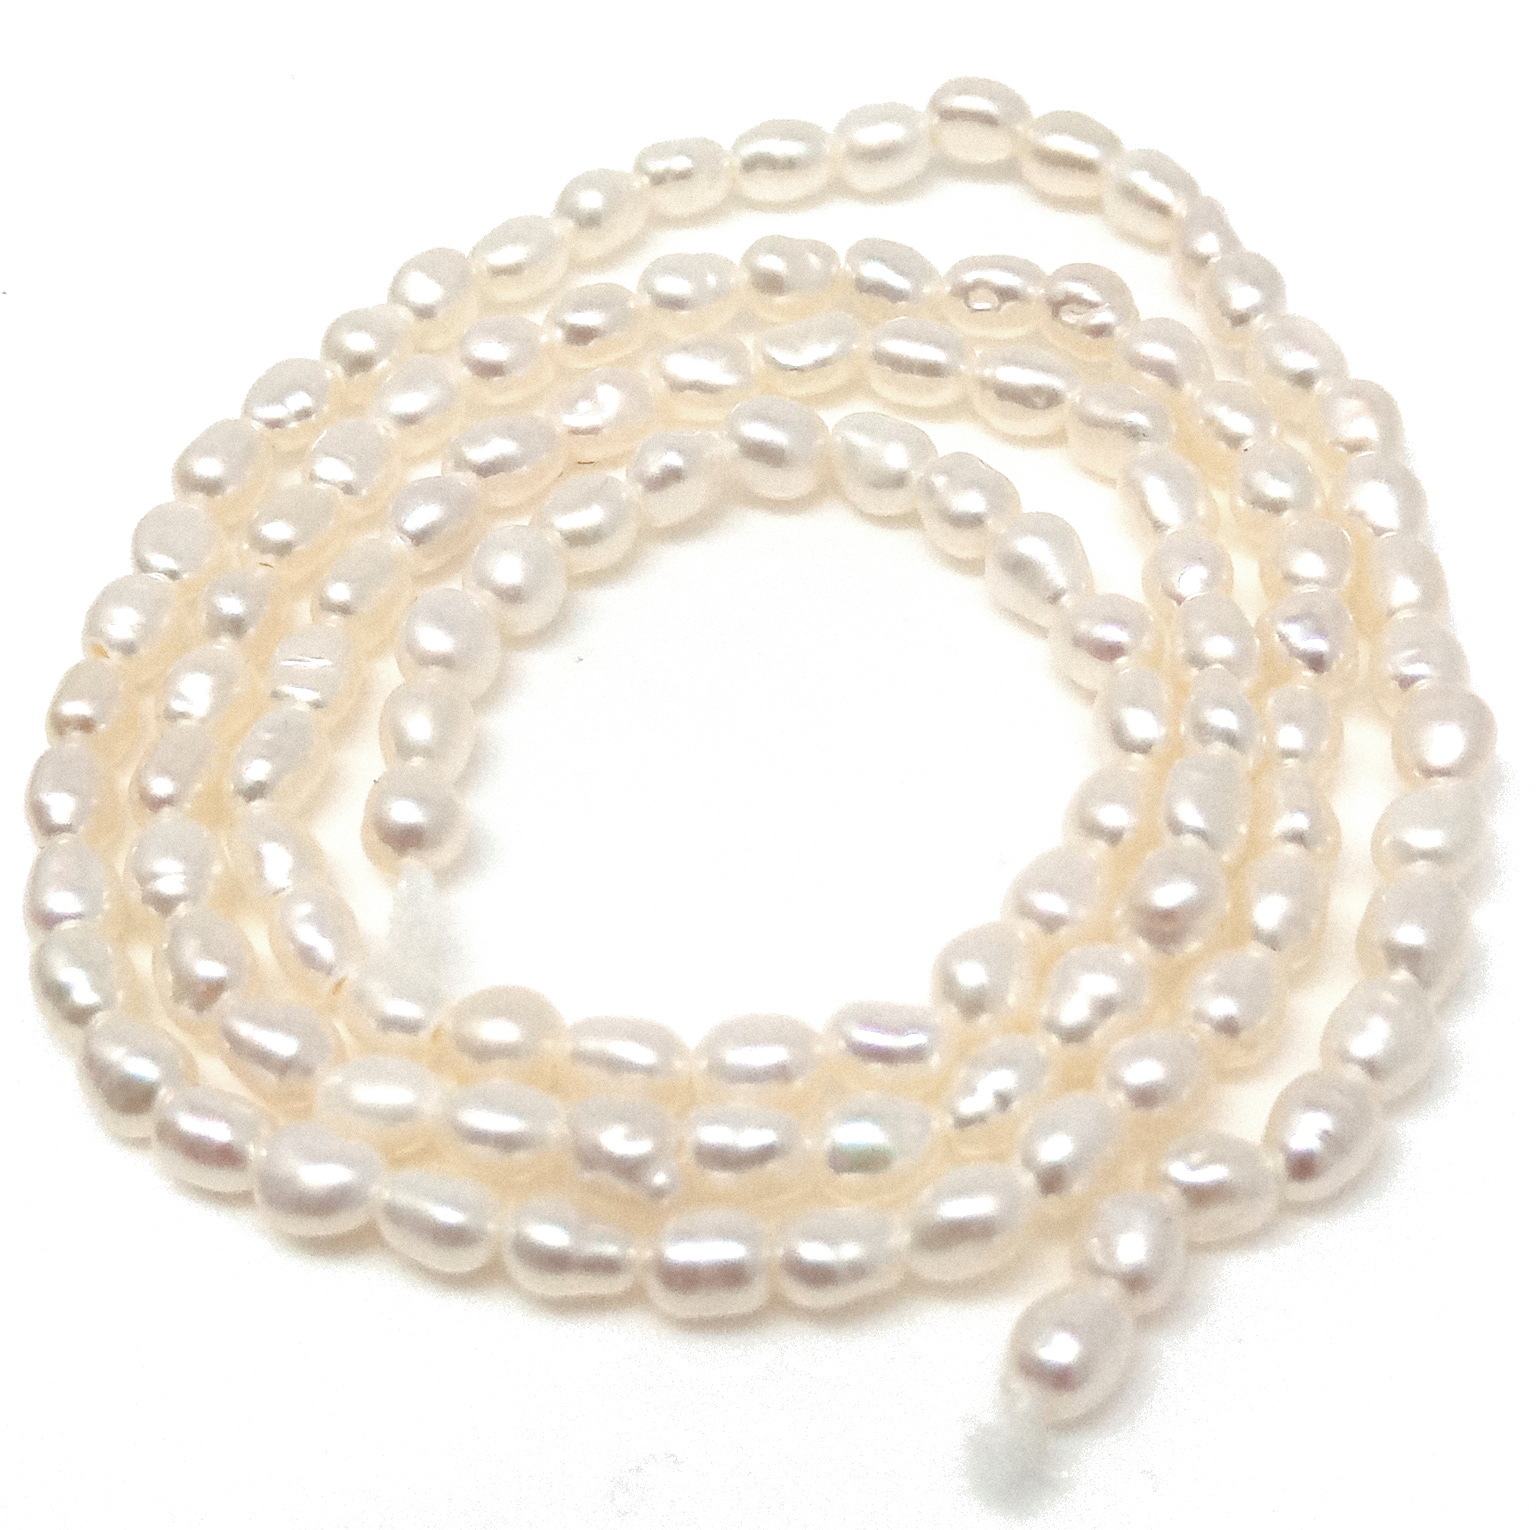 White 3-3.5mm Elliptical Pearls